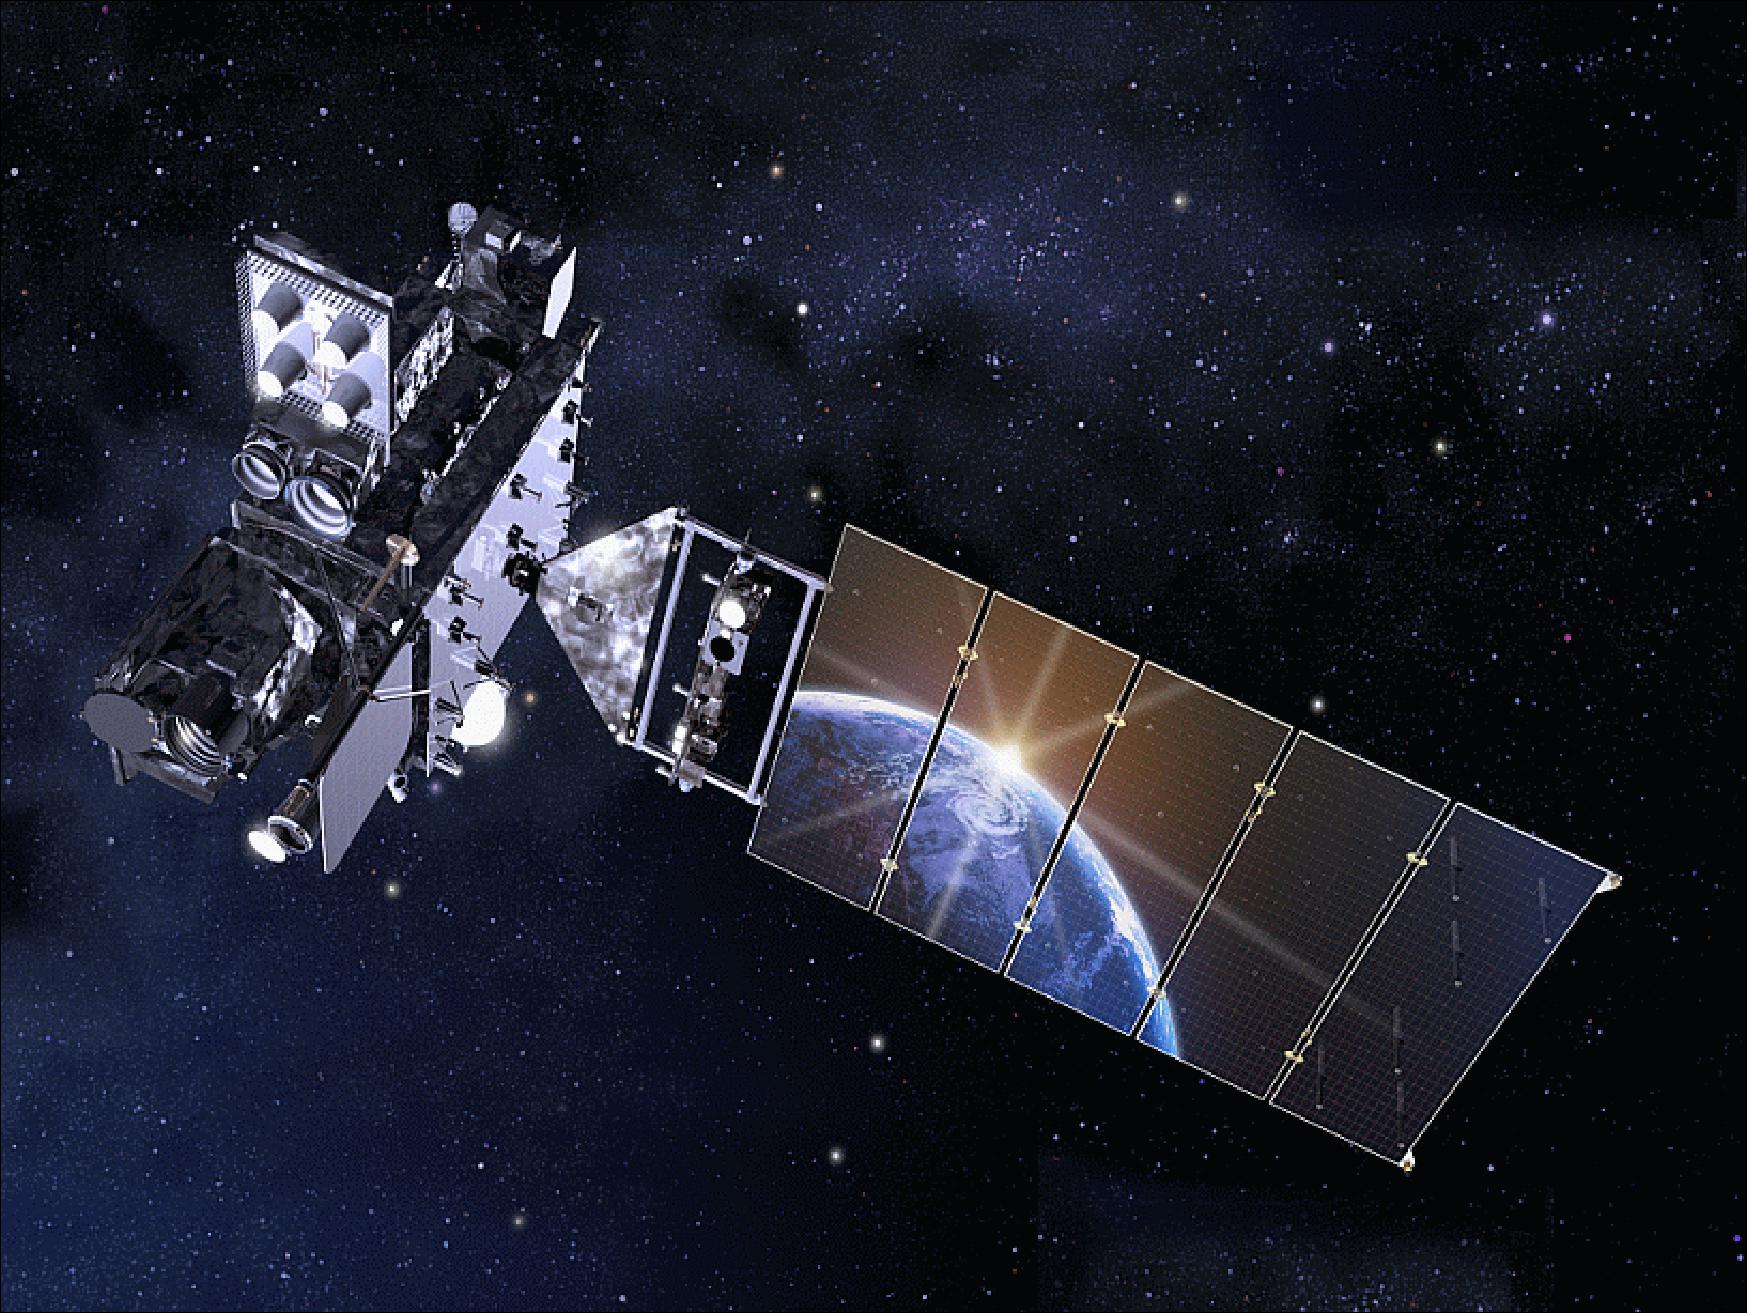 Figure 7: Illustration of the deployed GOES-R spacecraft (image credit: NOAA, NASA) 27)